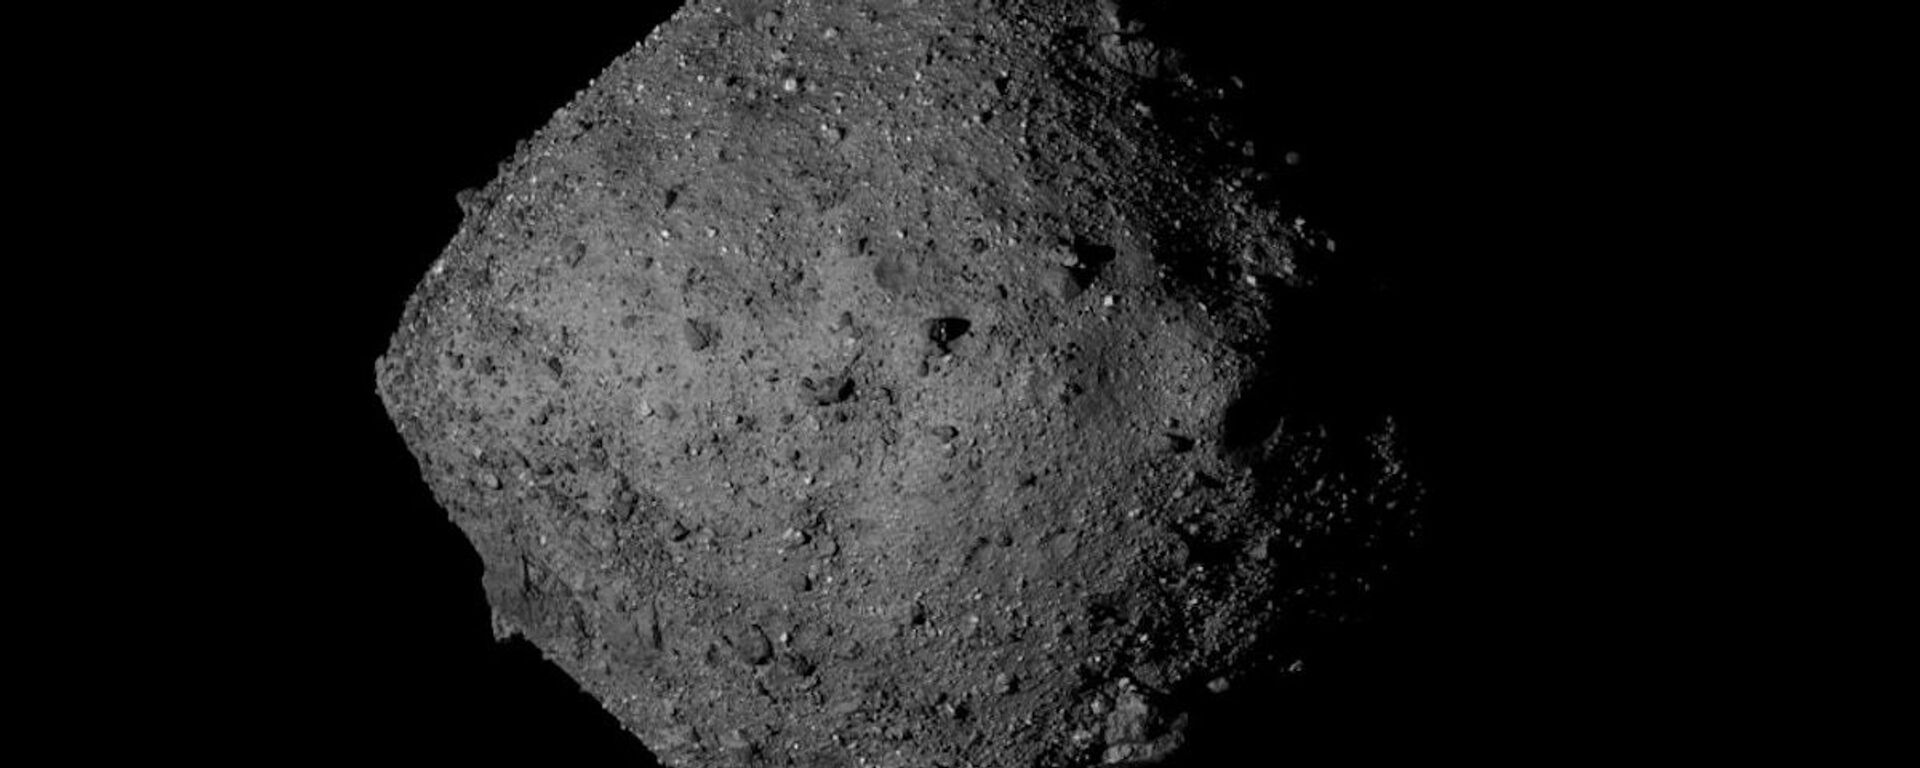 El asteroide Bennu - Sputnik Mundo, 1920, 09.03.2022